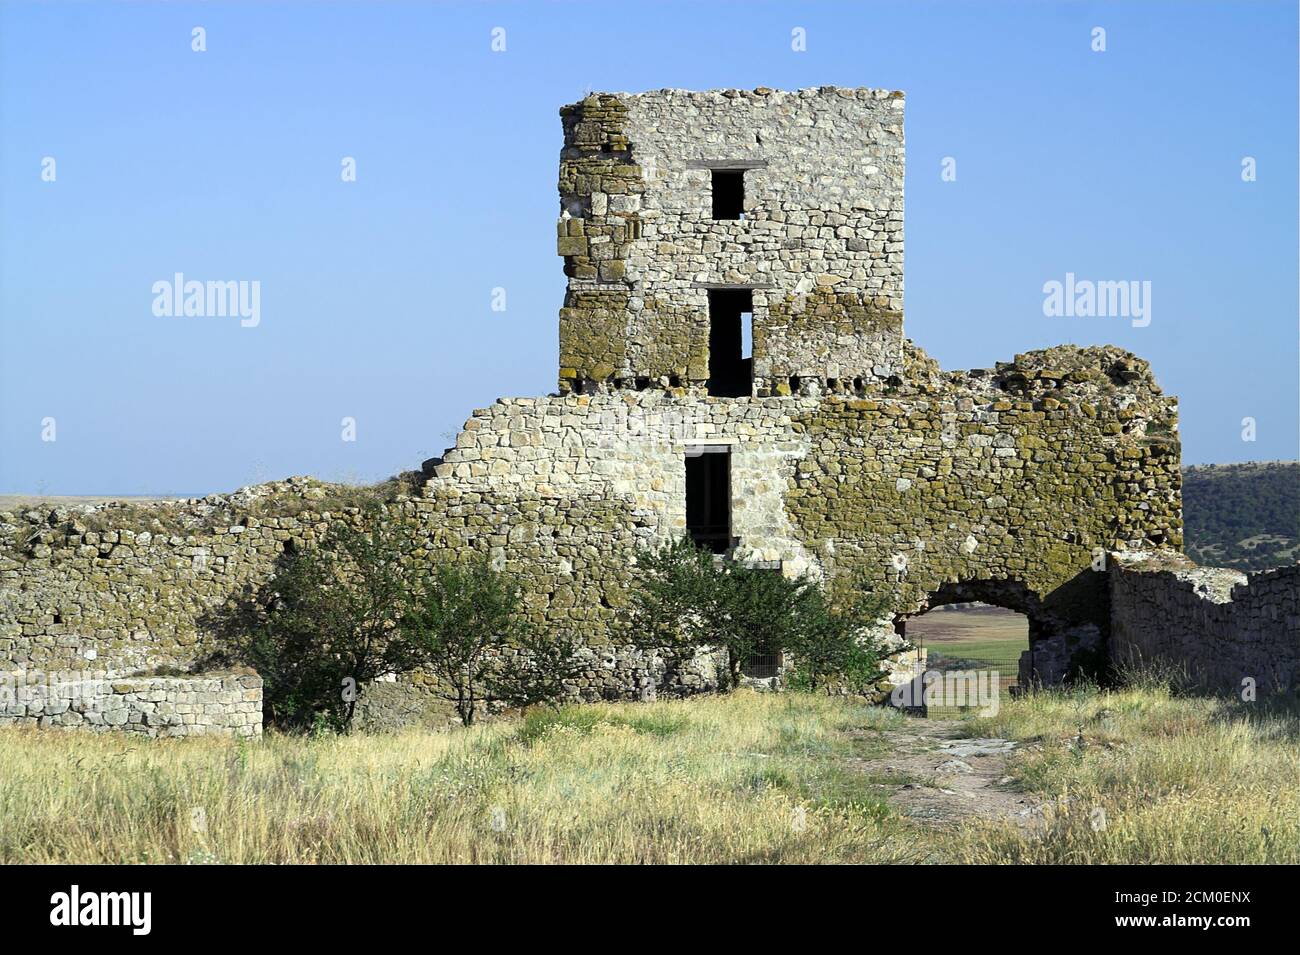 Romania, Enisala Castle (Heracleea) - ruins of a medieval castle. Rumänien, Enisala Castle (Heracleea) - Ruinen einer mittelalterlichen Burg. 中世紀城堡的廢墟 Stock Photo